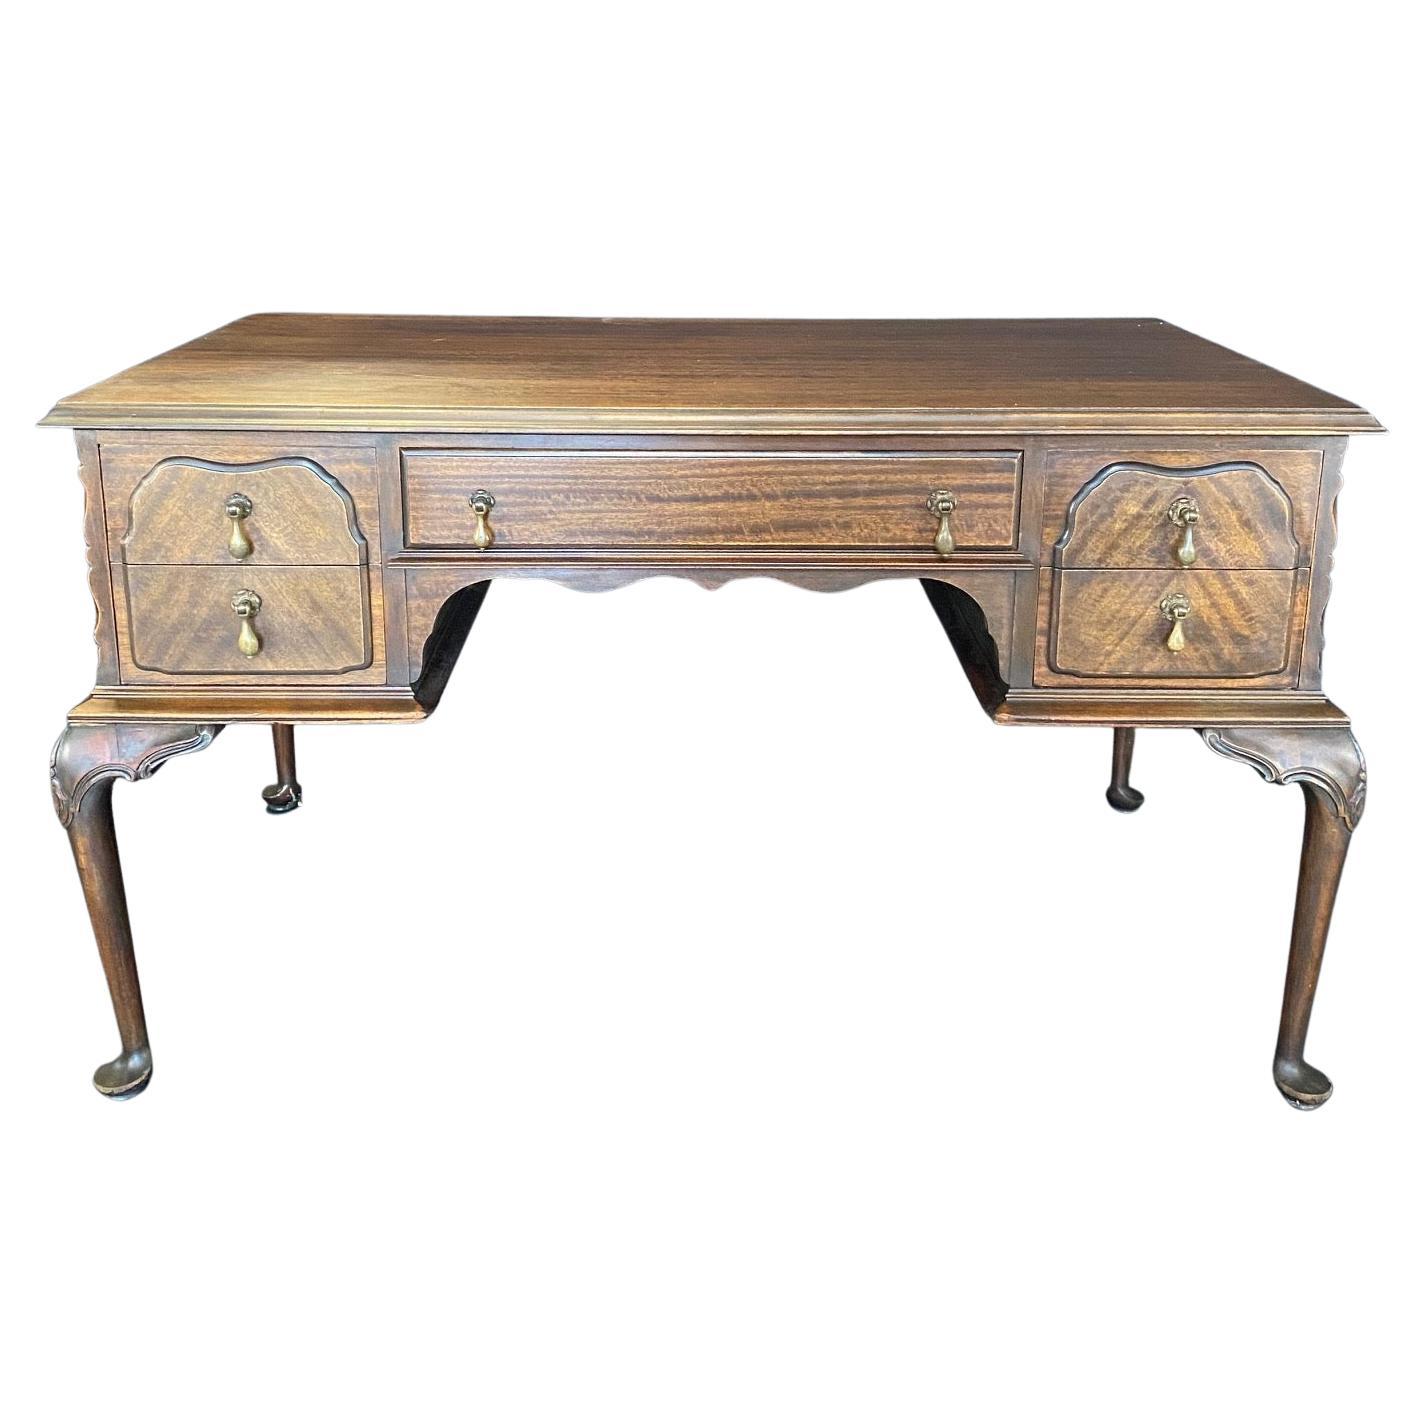 Bellissimo tavolo o scrivania francese in stile Luigi XV